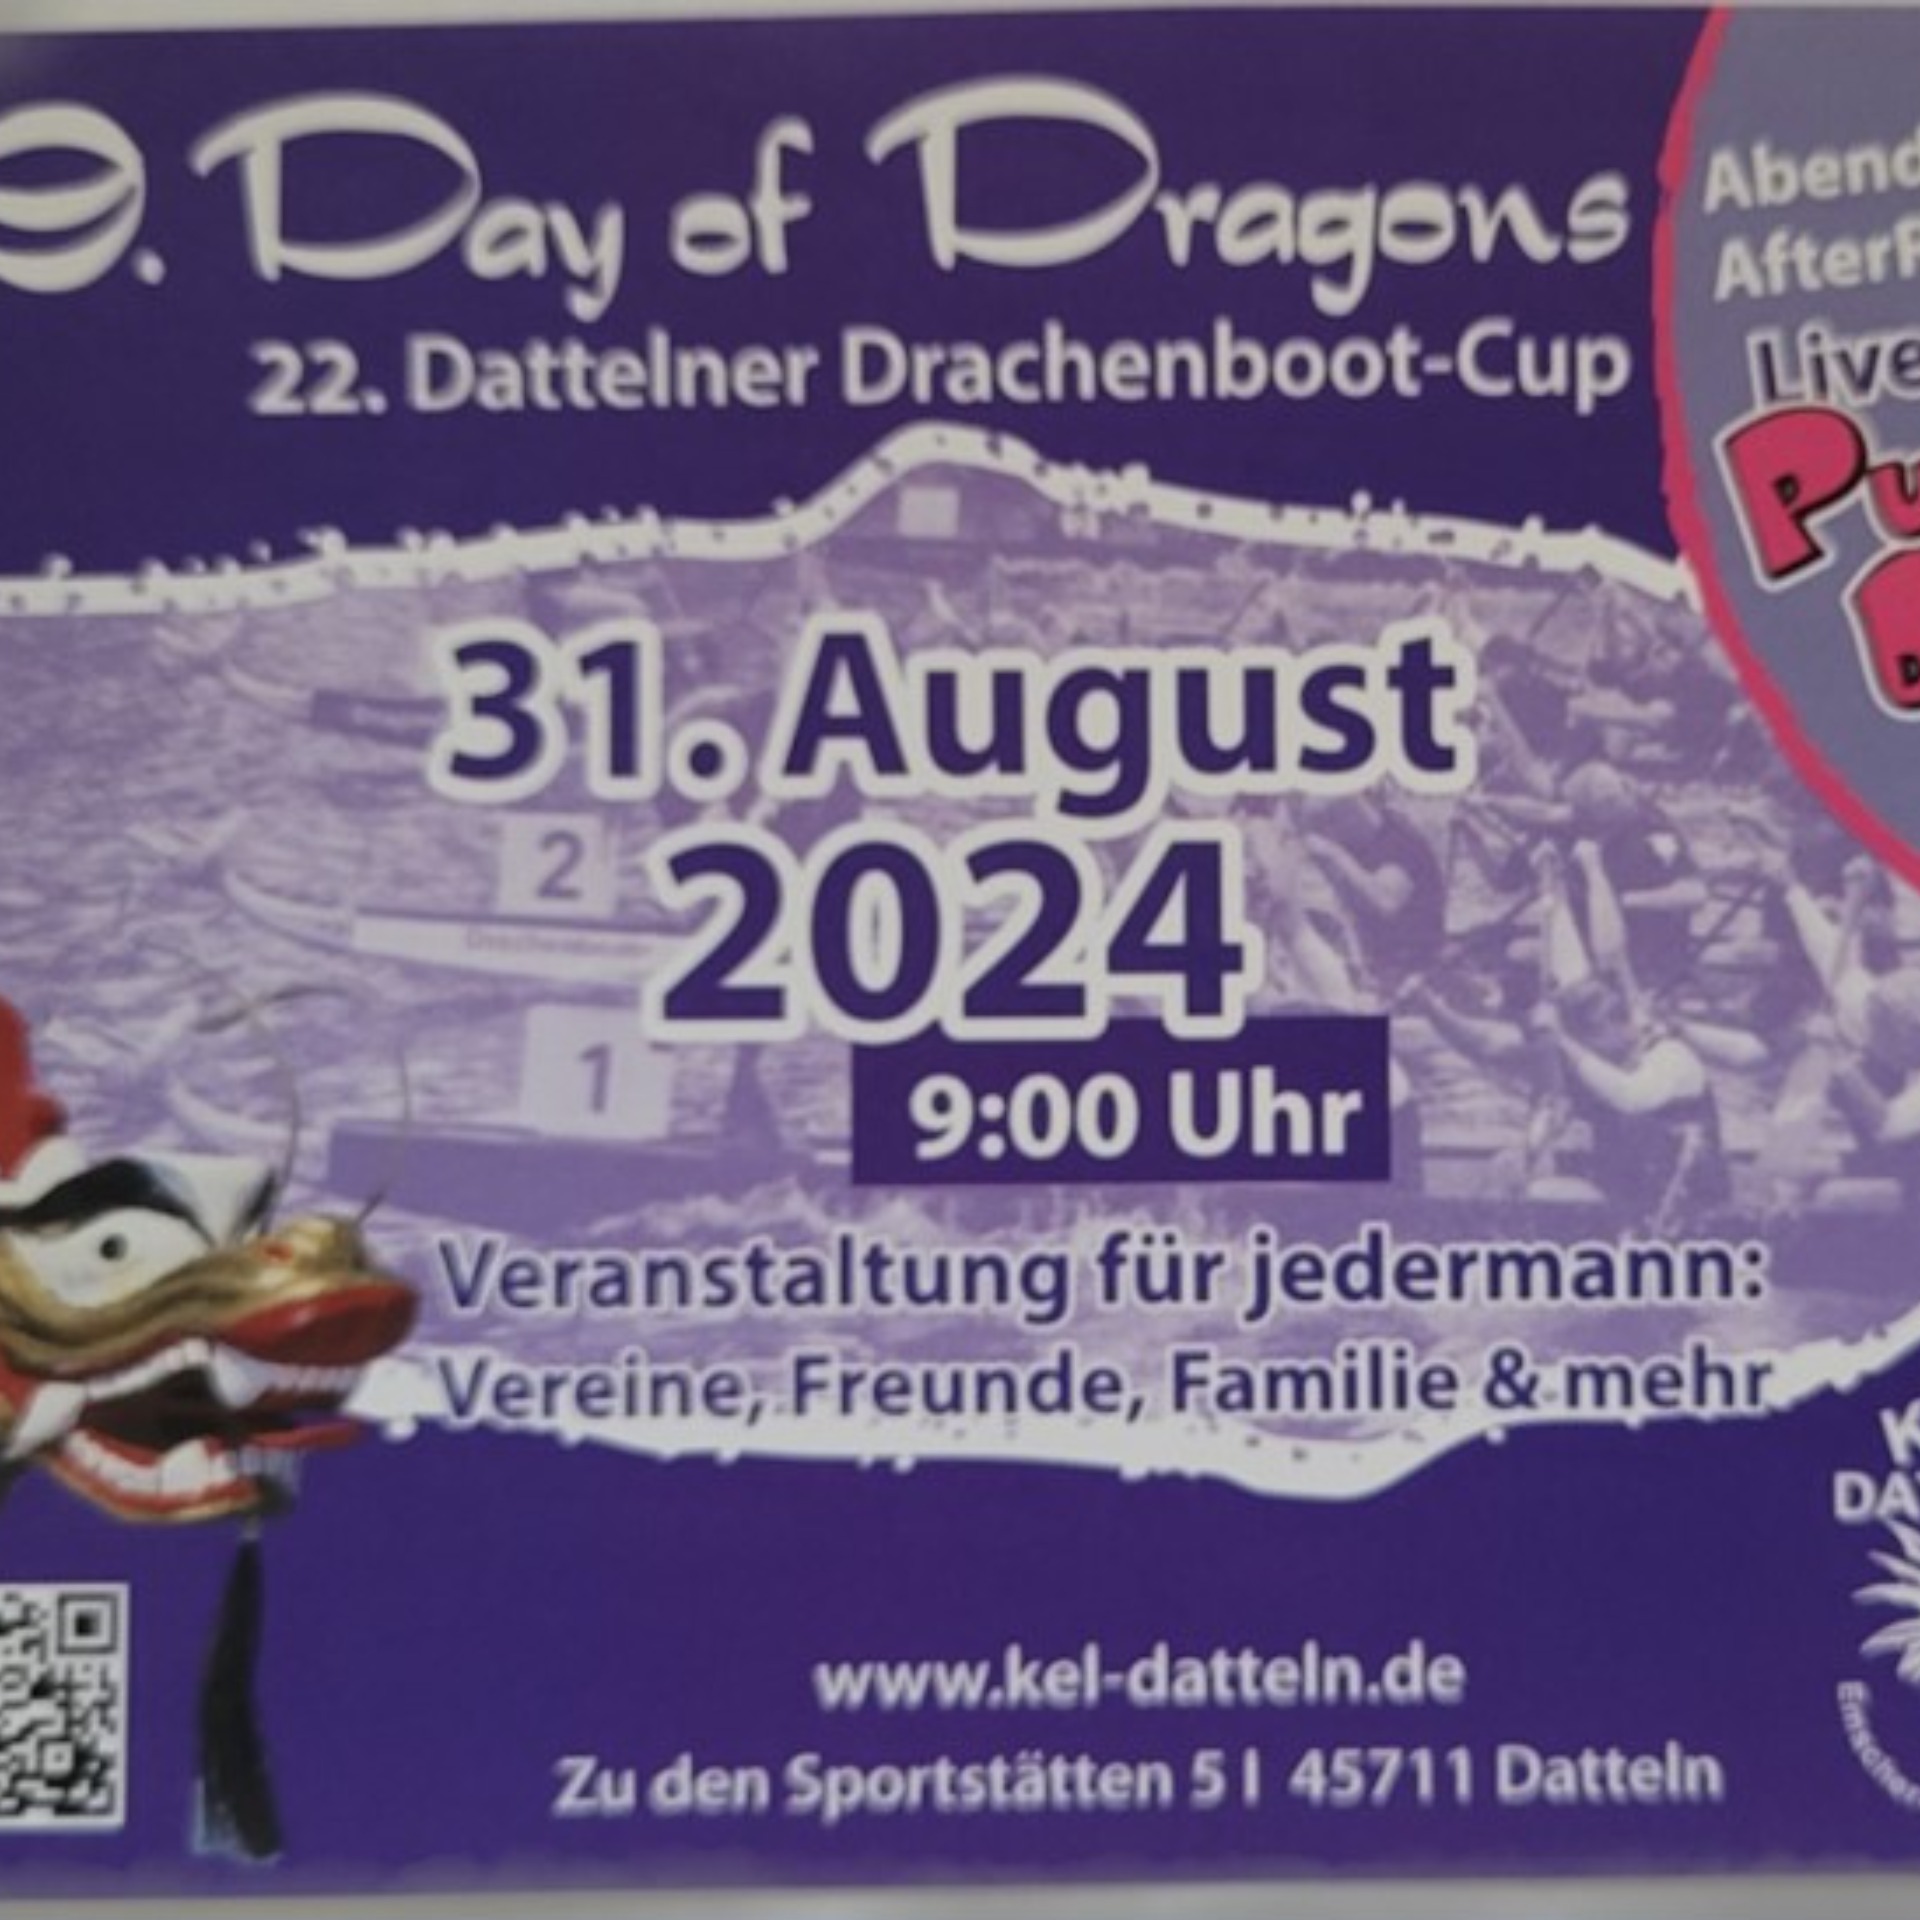 9. Day of Dragons Datteln 22. Dattelner Drachenboot Cup